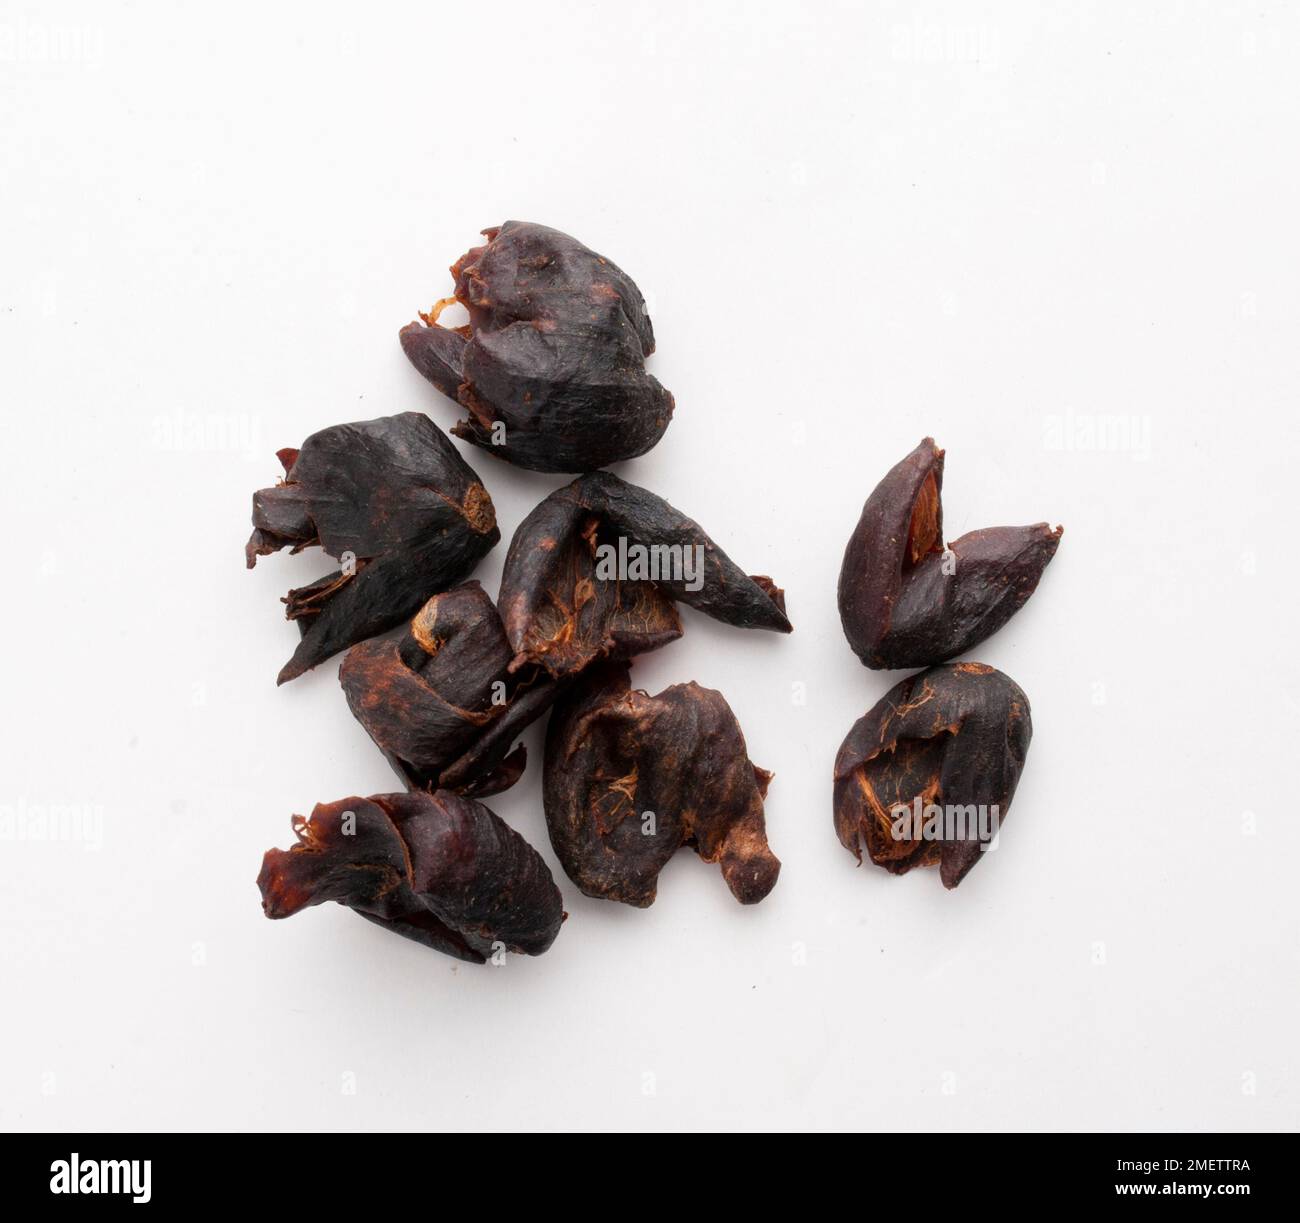 Cascera, shell or husk of coffee cherry Stock Photo